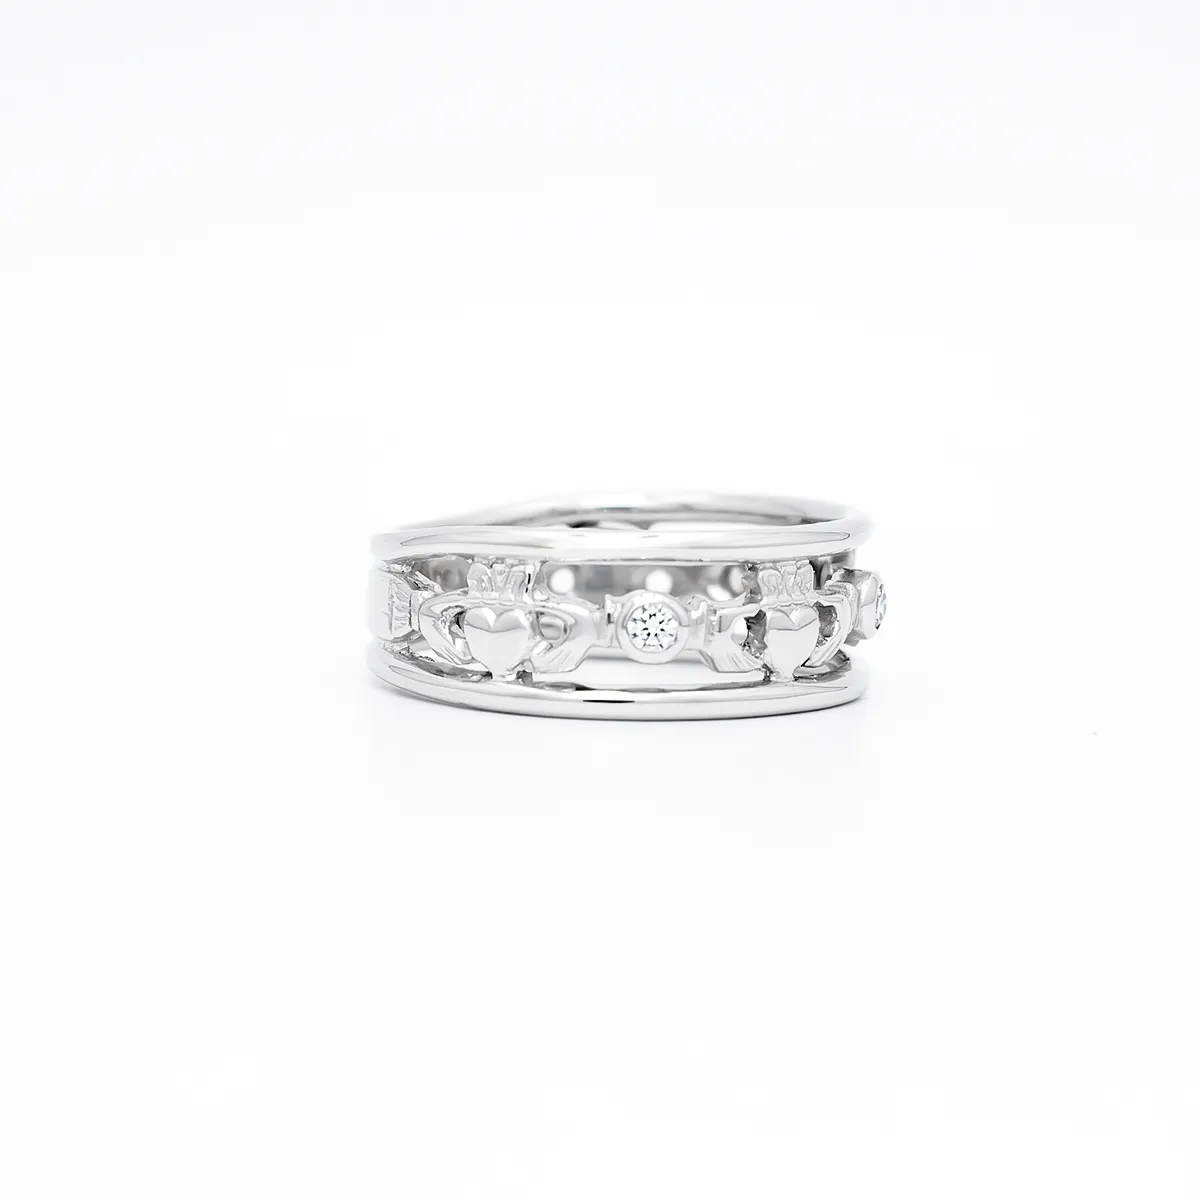 IJCR0042 White Gold Diamond Claddagh Ring 2